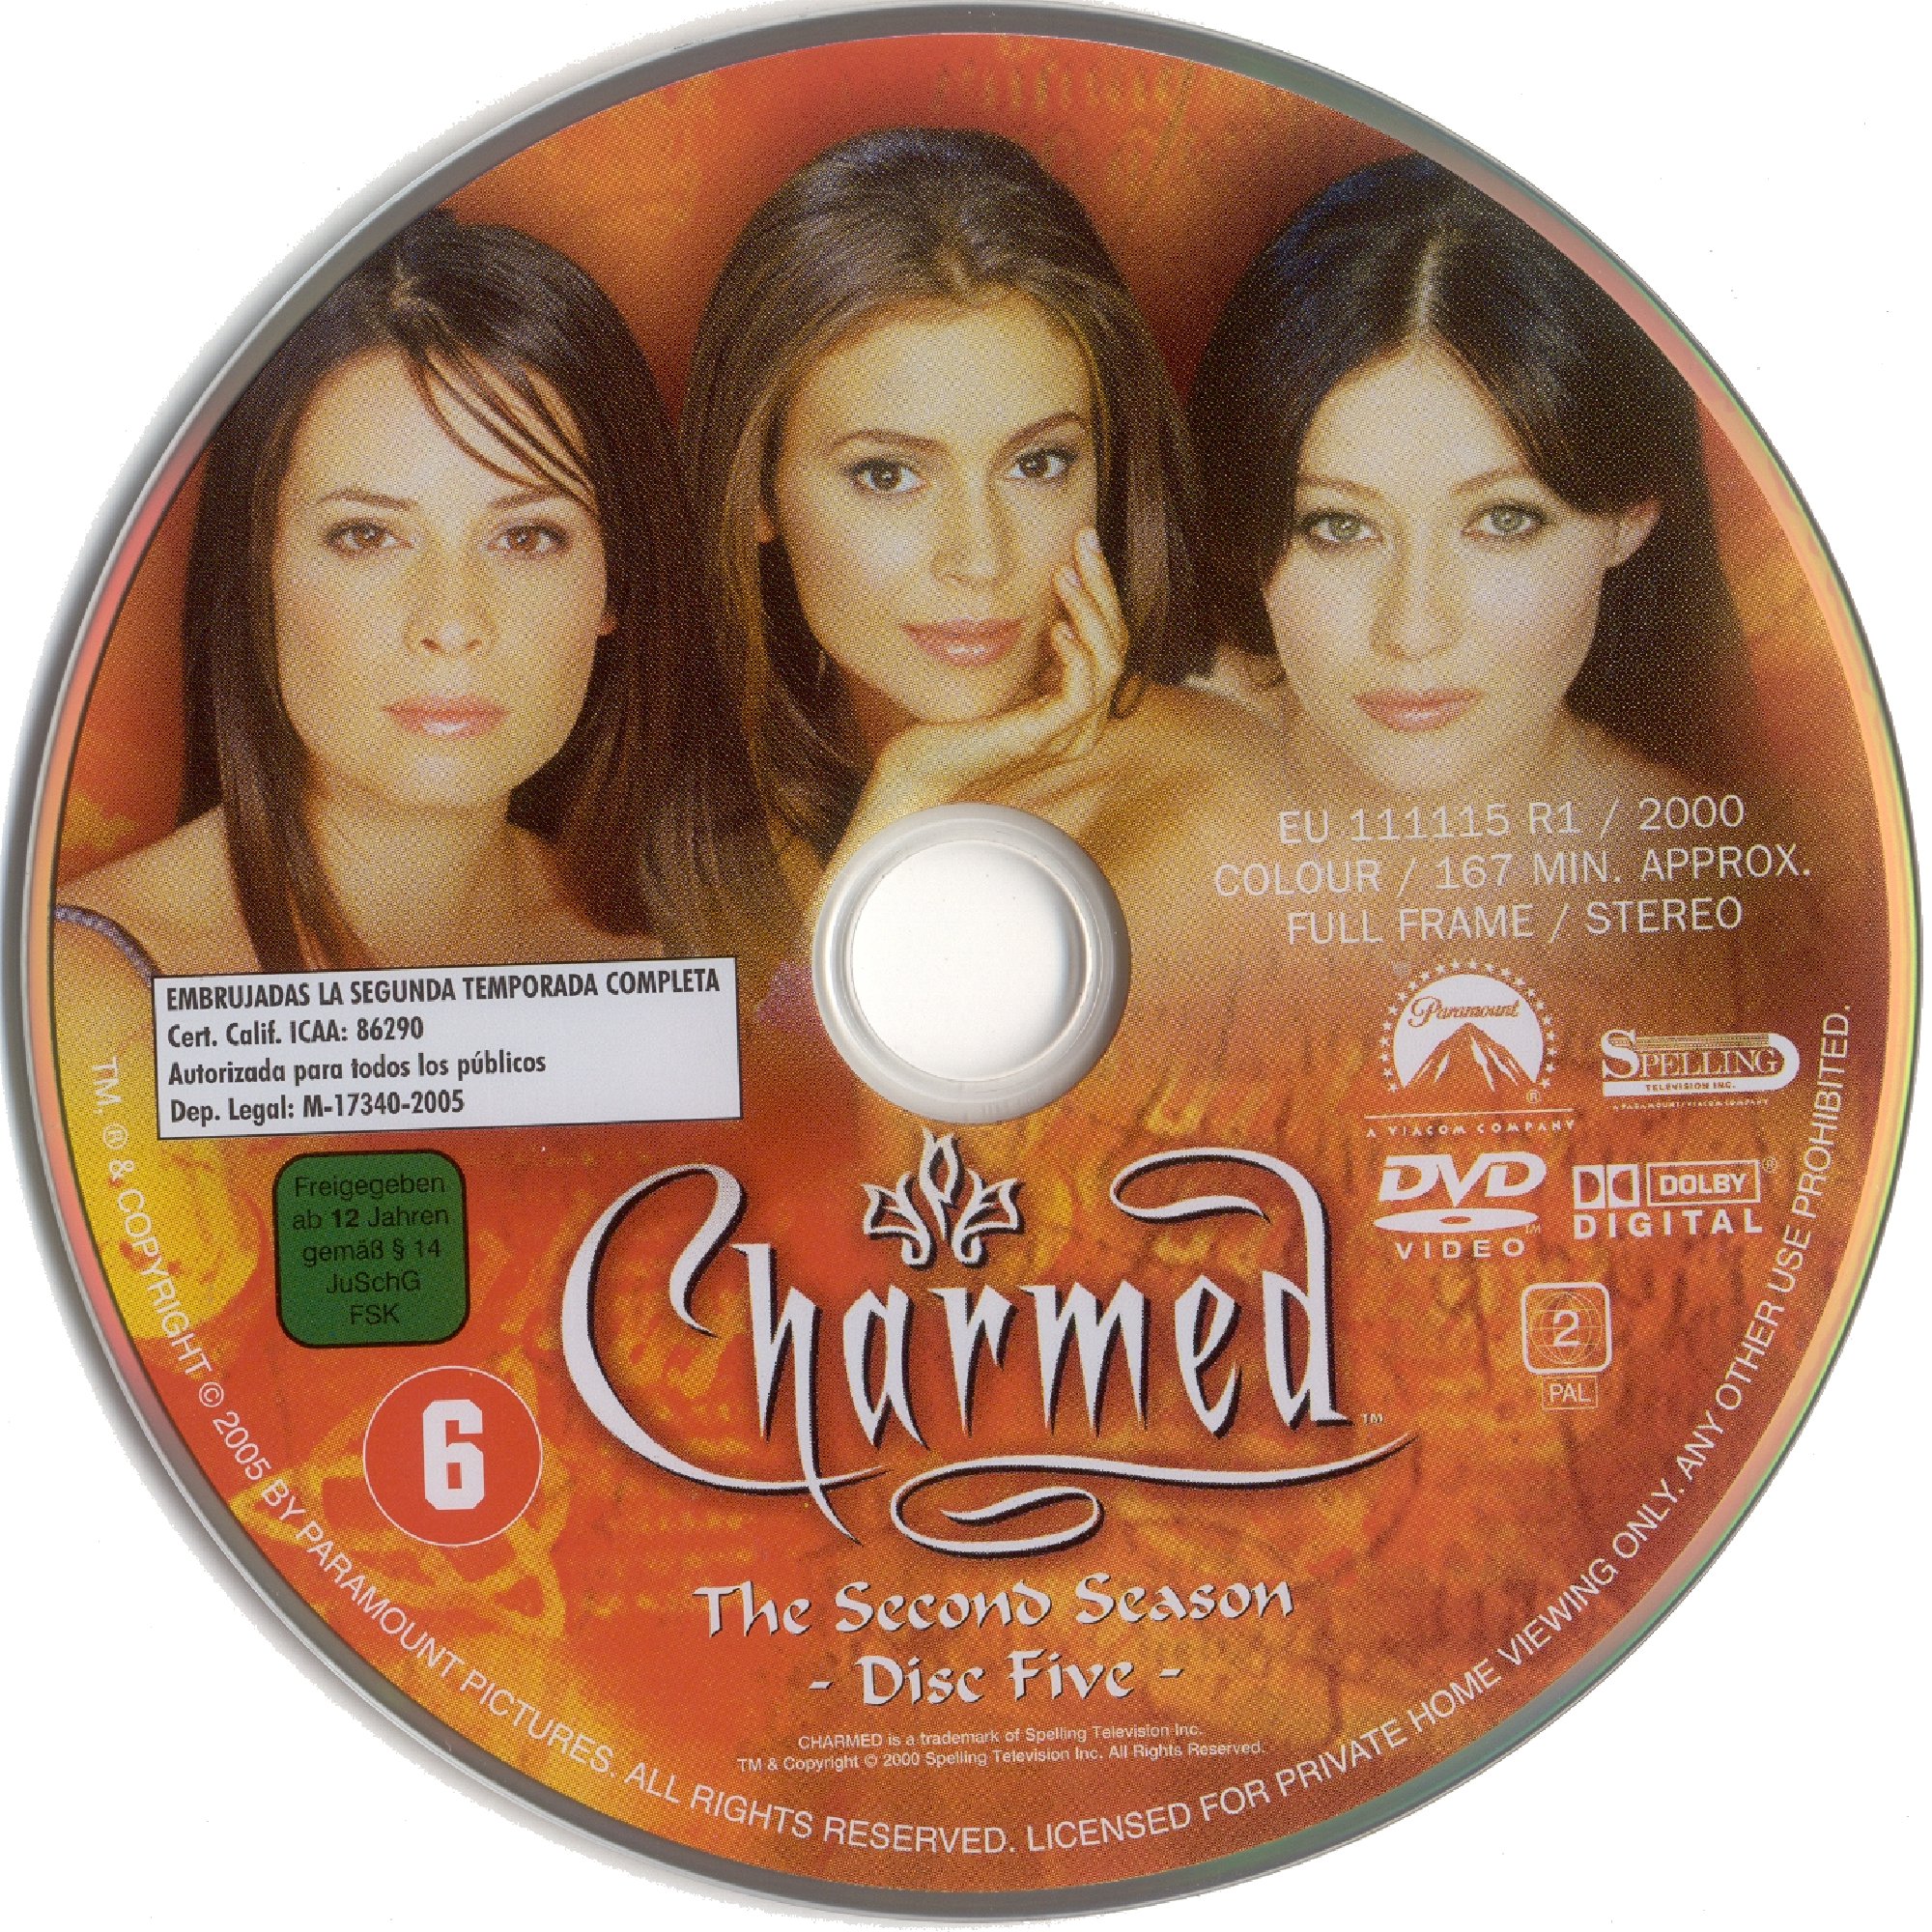 Charmed Saison 2 dvd 5